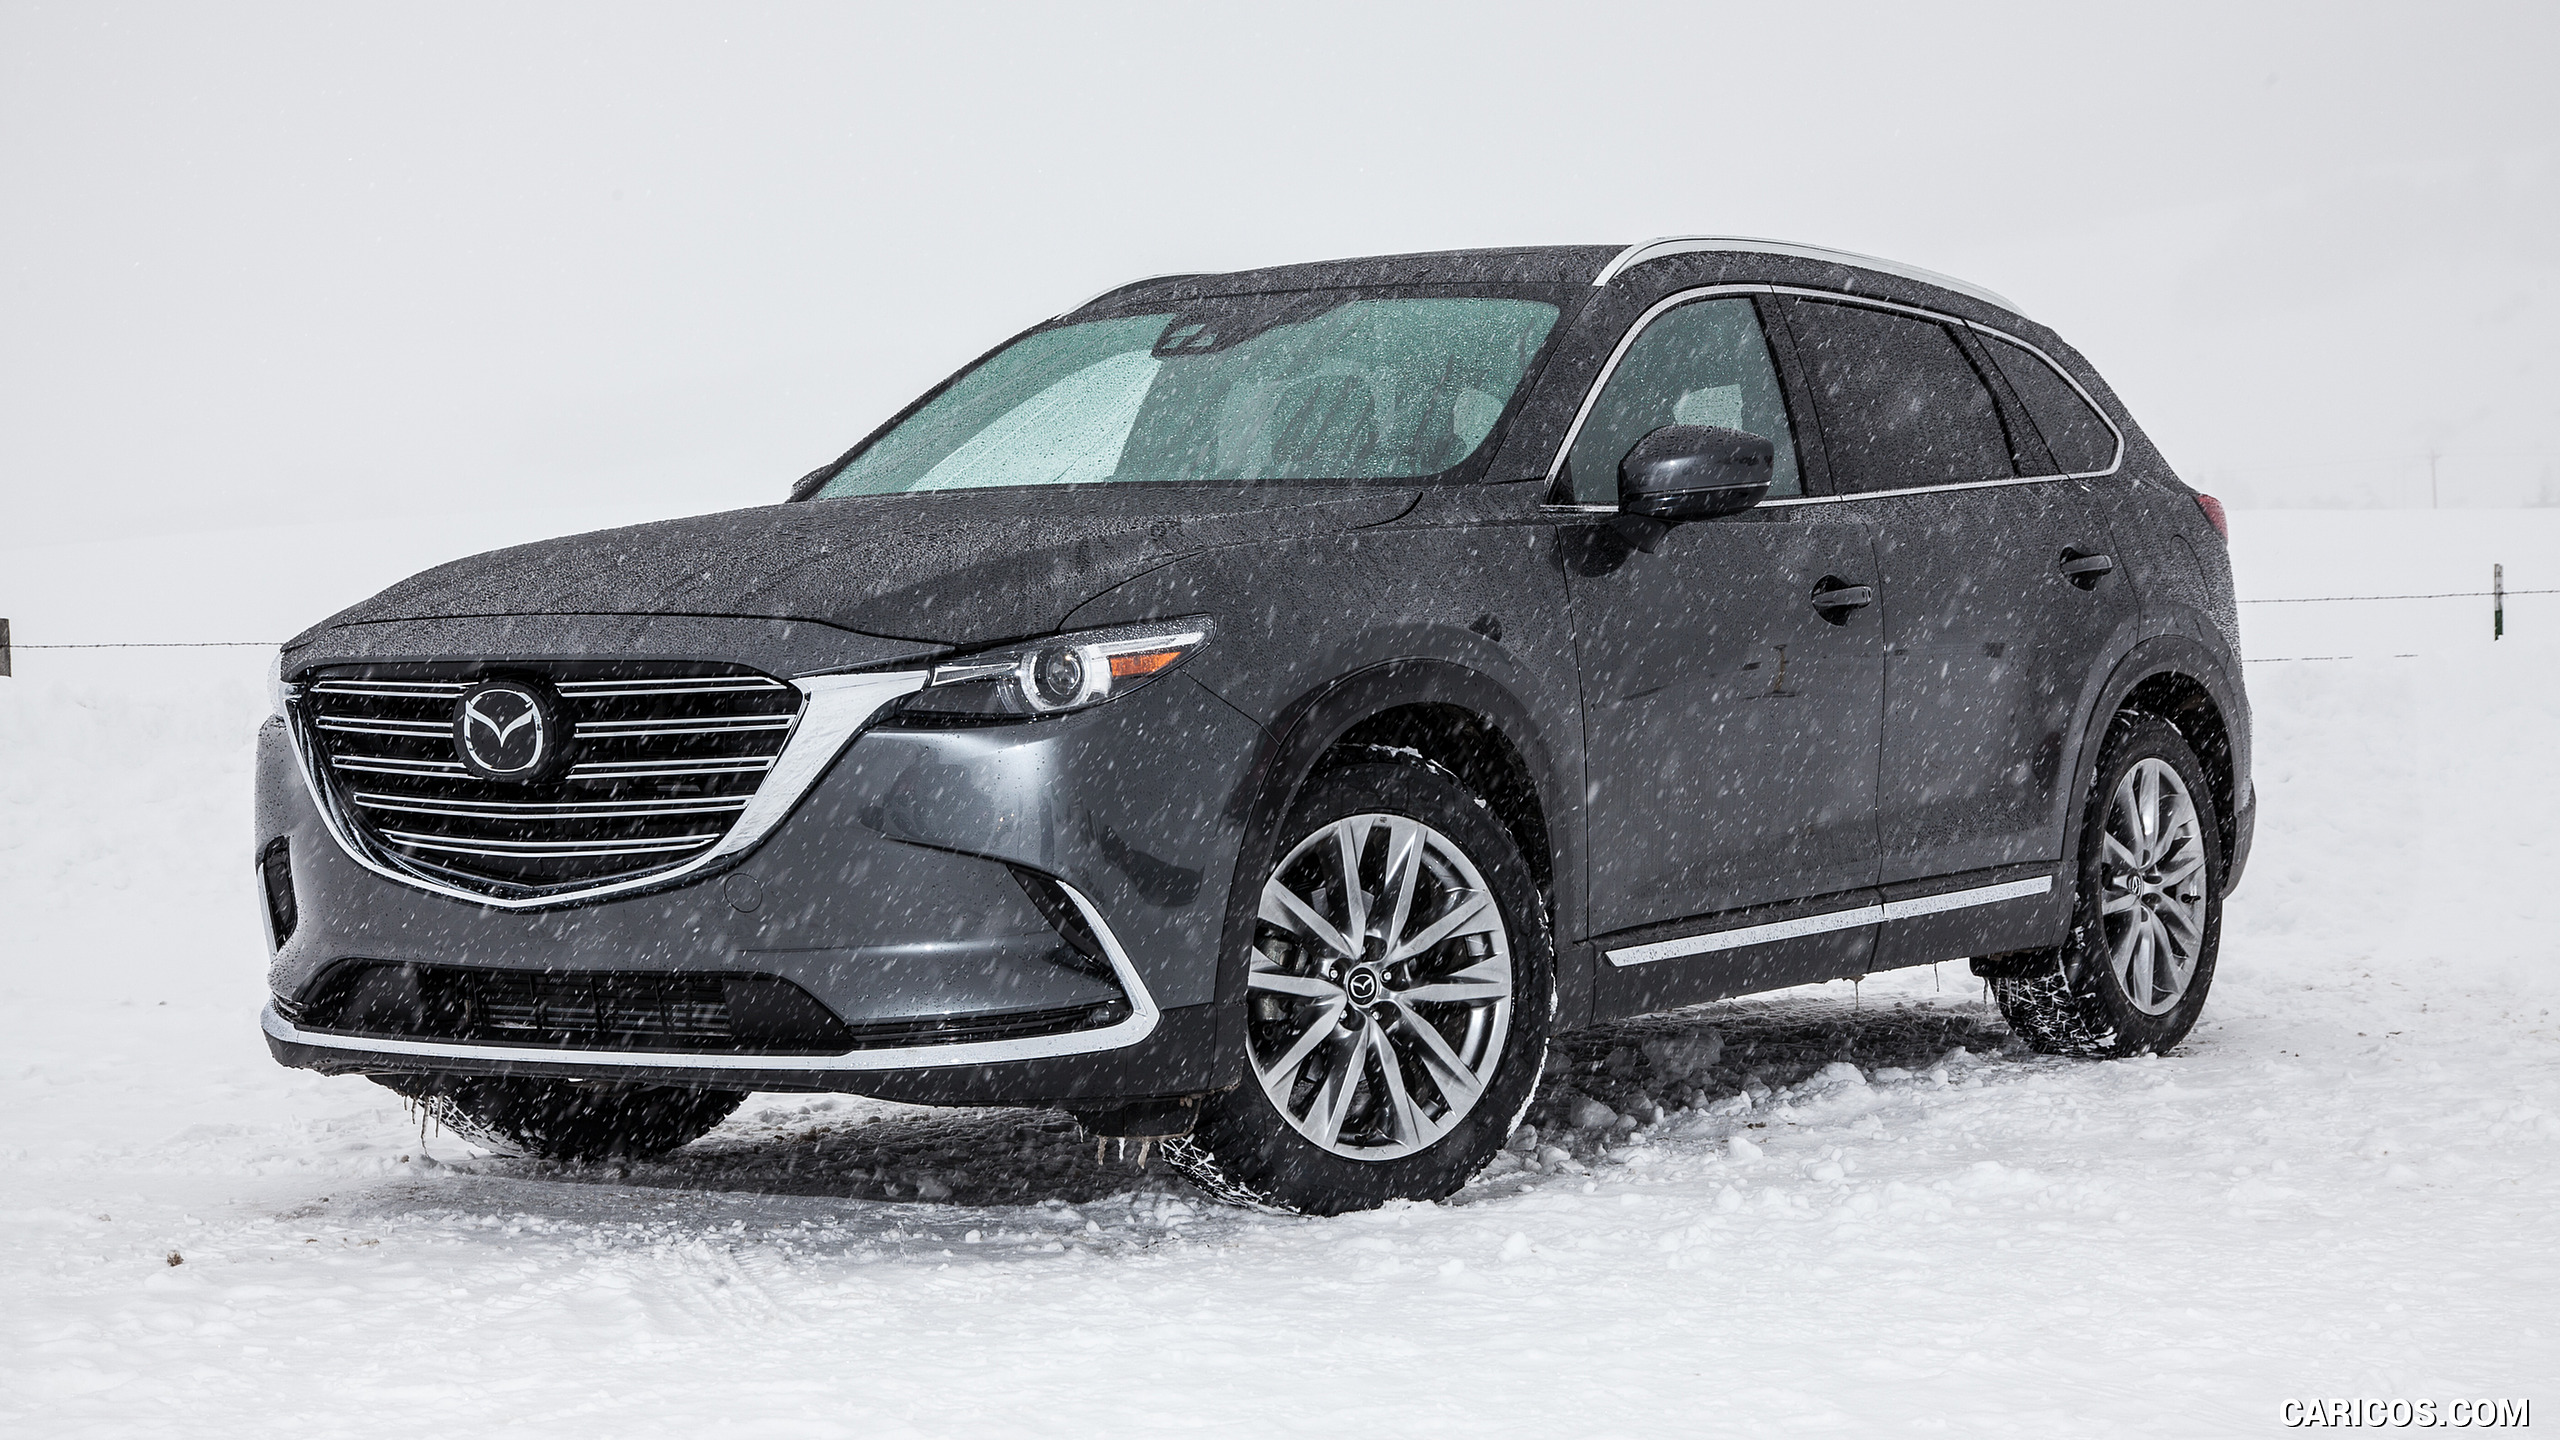 2016 Mazda CX-9 in Snow - Front Three-Quarter, #68 of 69